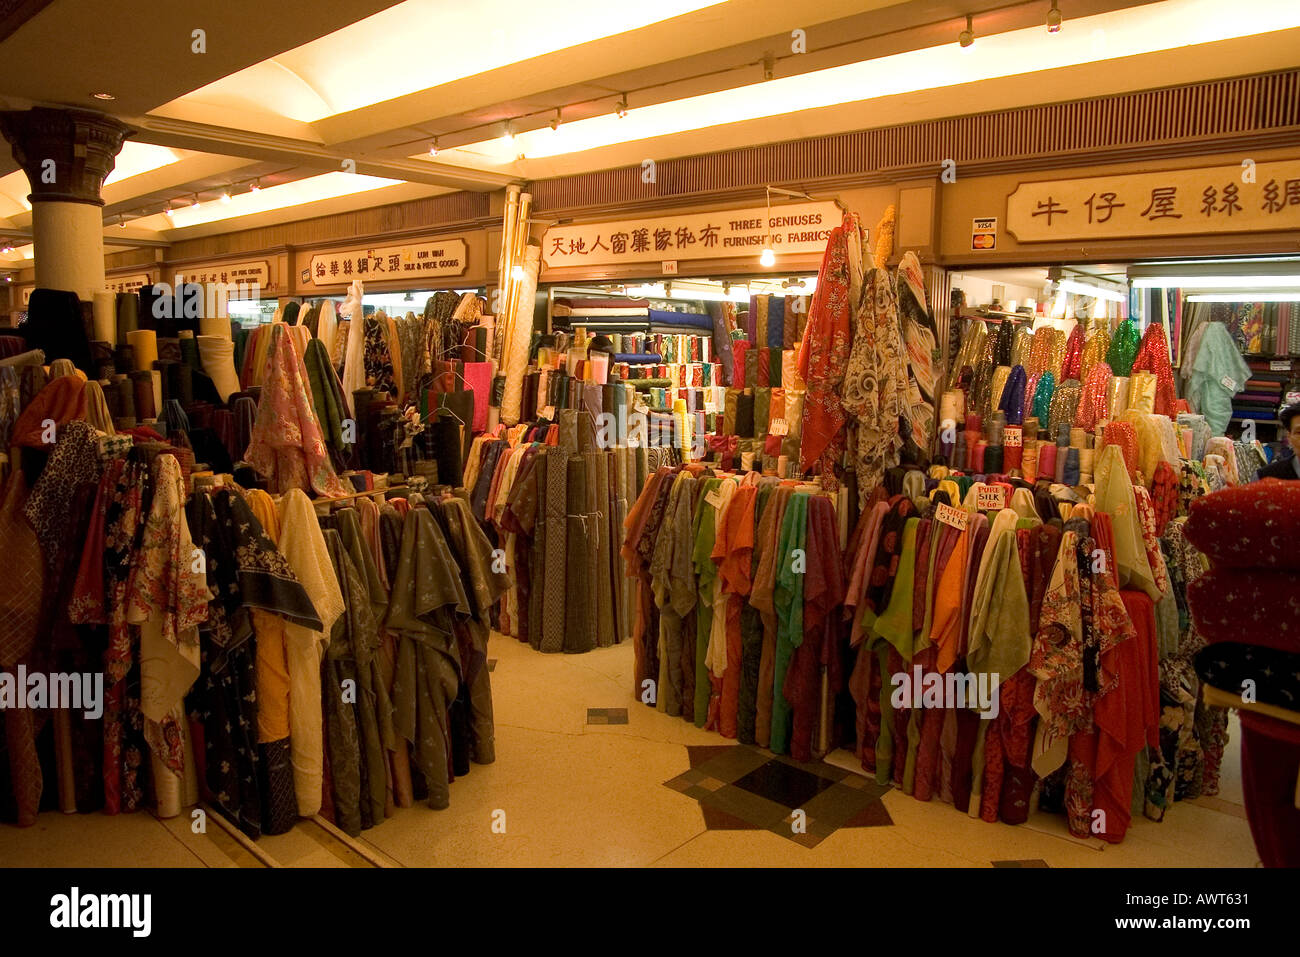 Dh westlichen Markt Sheung Wan in Hongkong Material Seide brötchen Geschäfte China Textile fabric Store orientalische Tuch shop Stockfoto